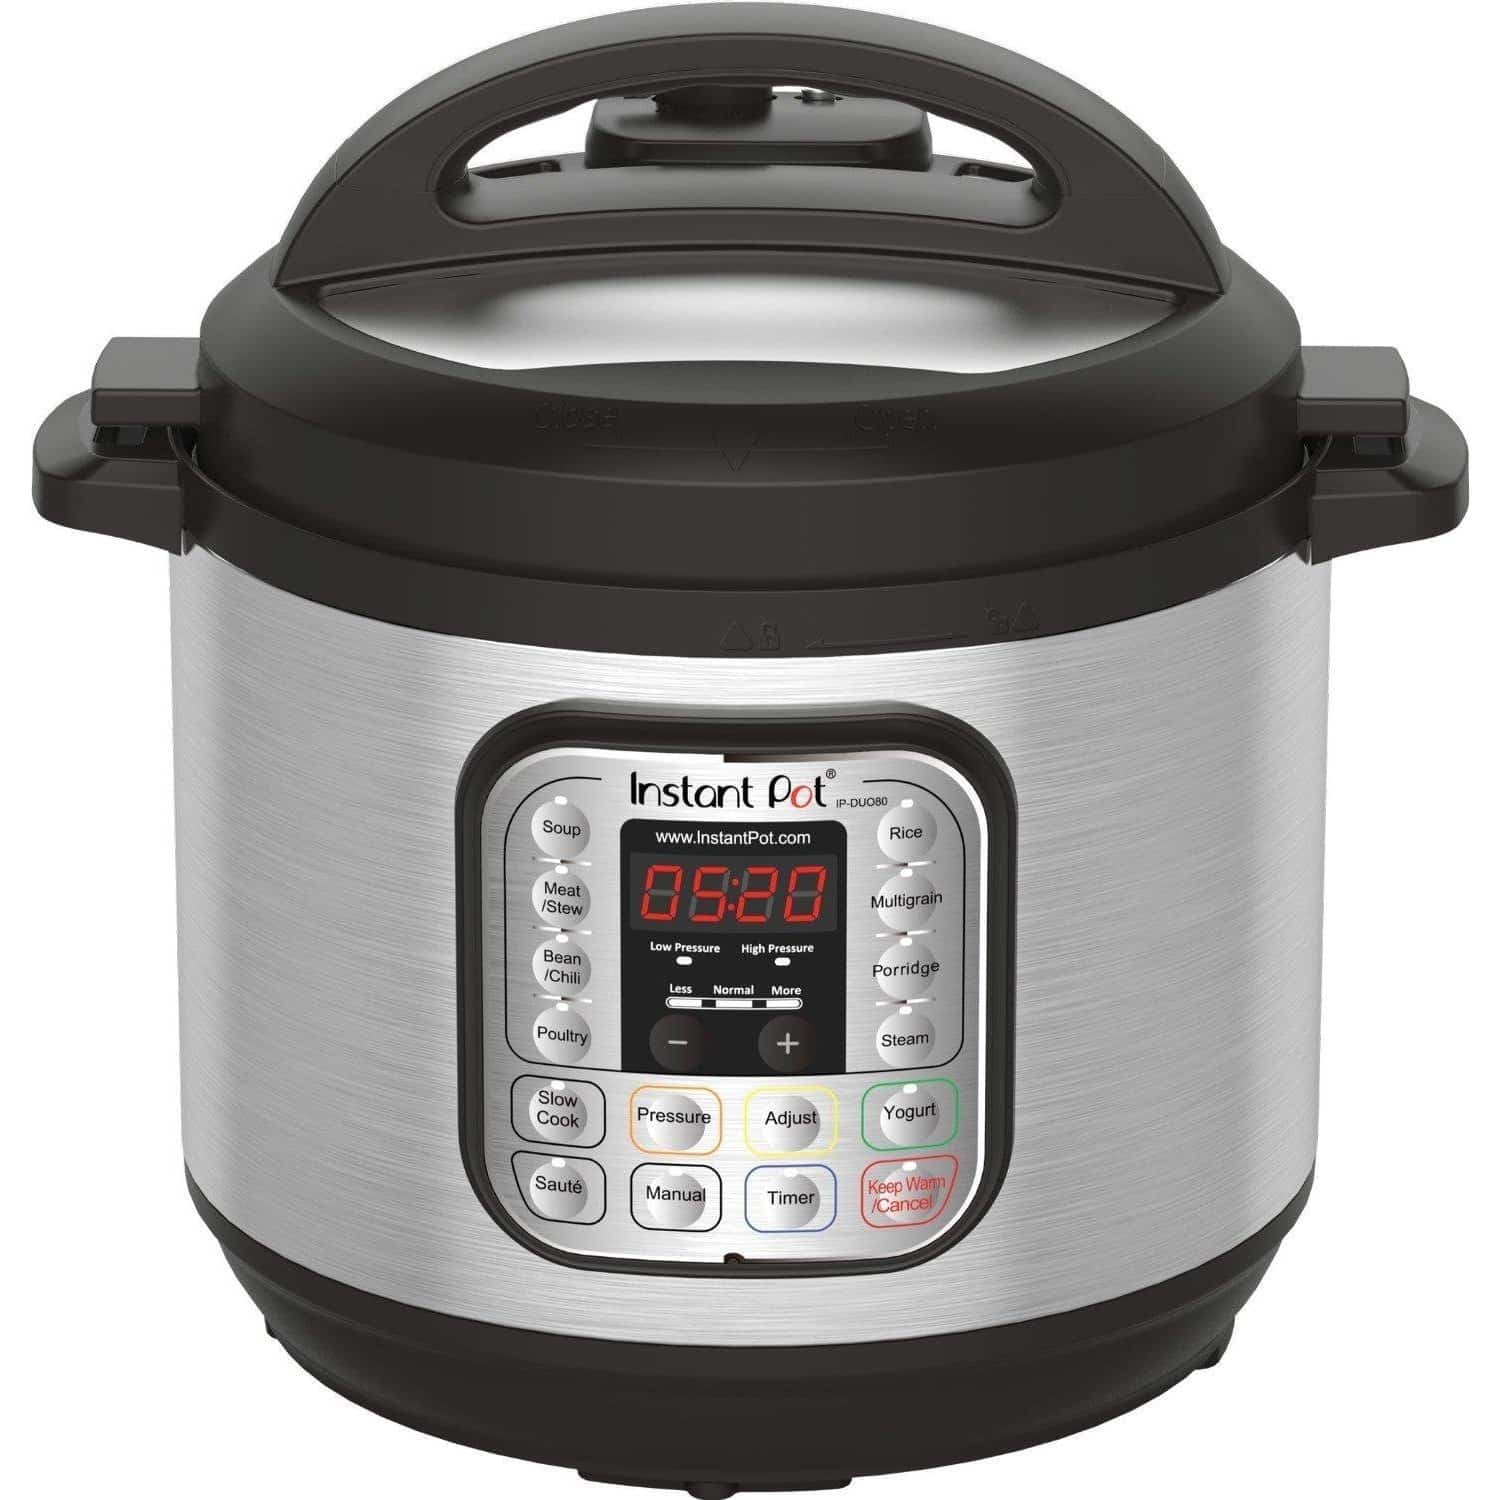 DEAL ALERT: Instant Pot 7-in-1 Multi-Use Programmable Pressure Cooker, 8 Quart – 31% off!